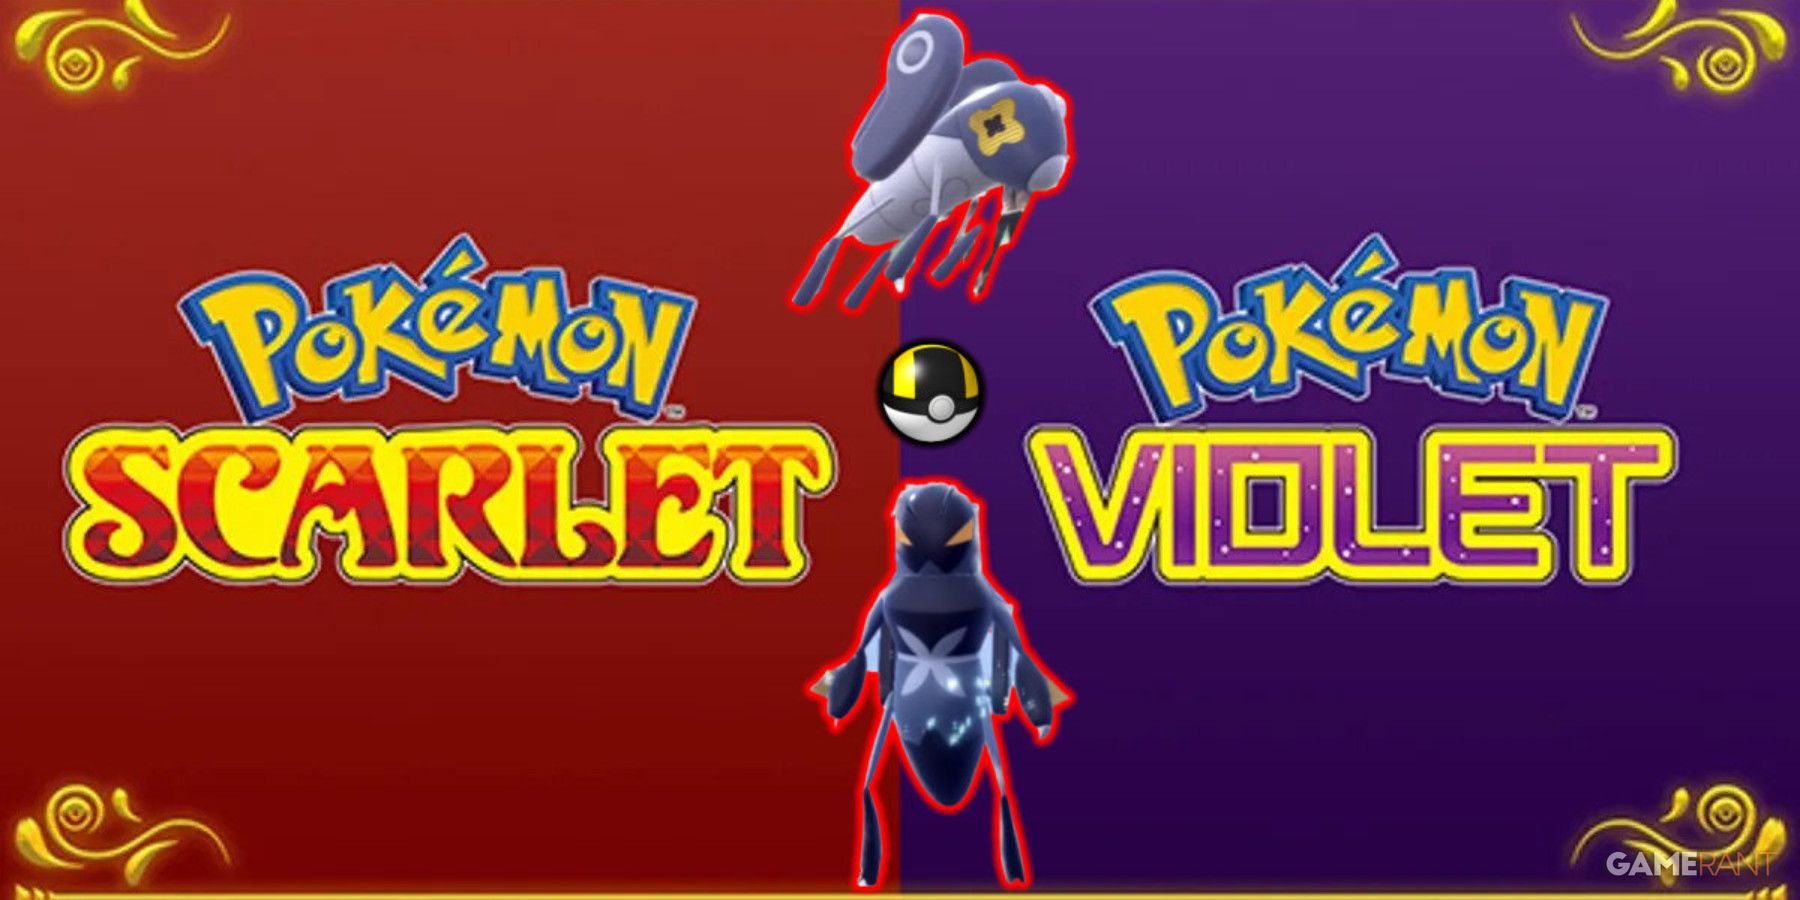 Pokemon Scarlet & Violet Nymble - Lokix 